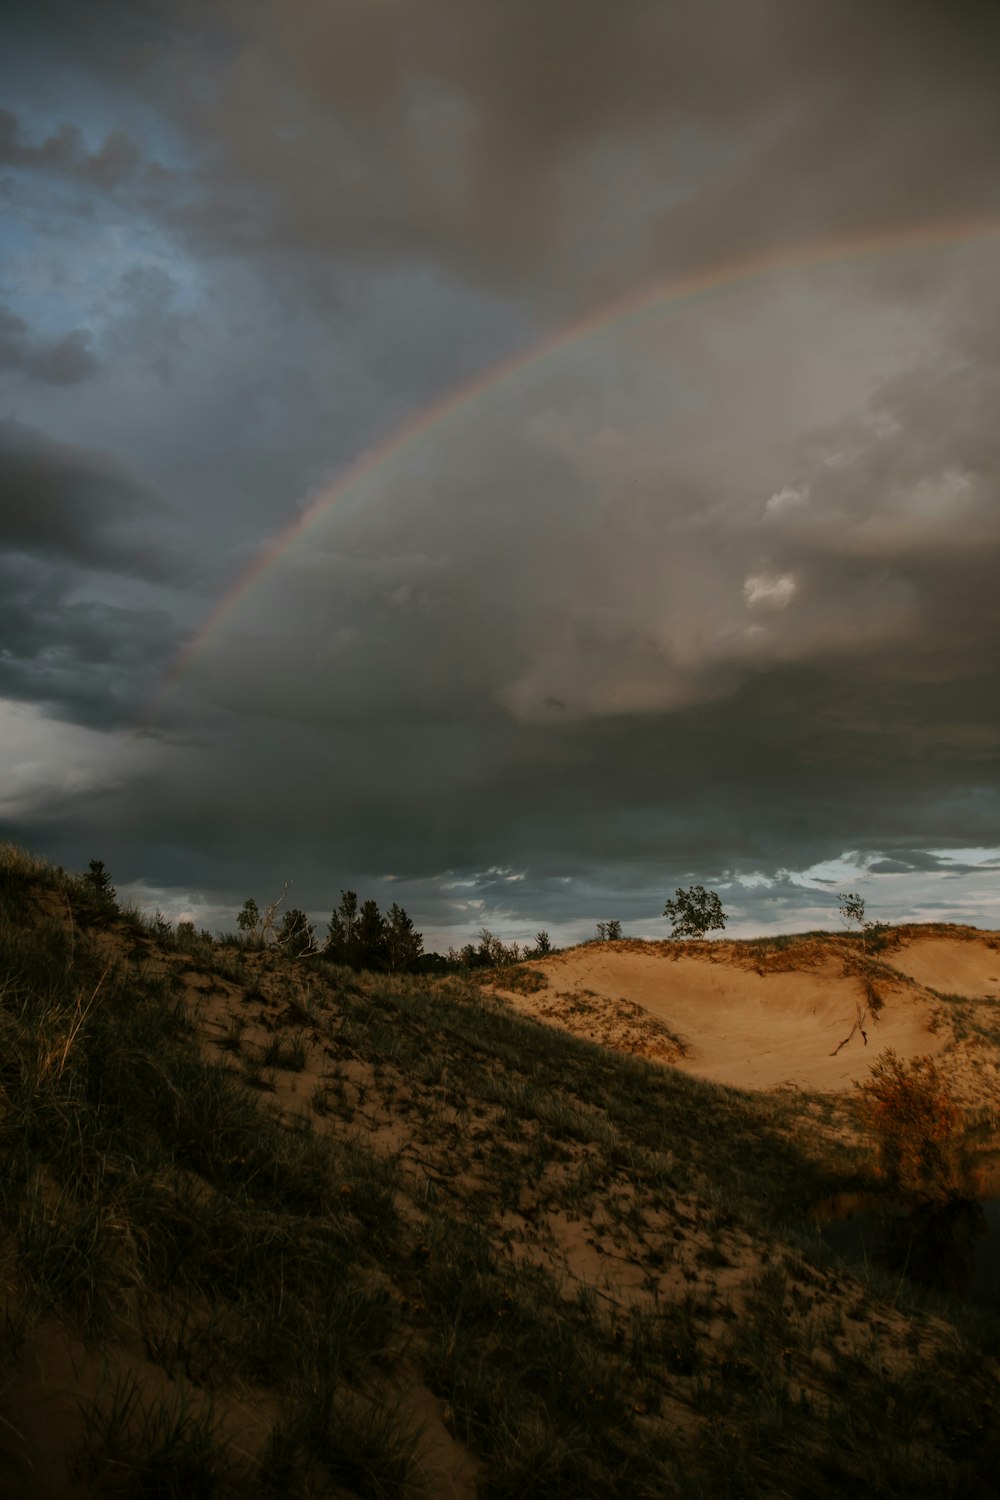 a rainbow in the sky over a sandy hill